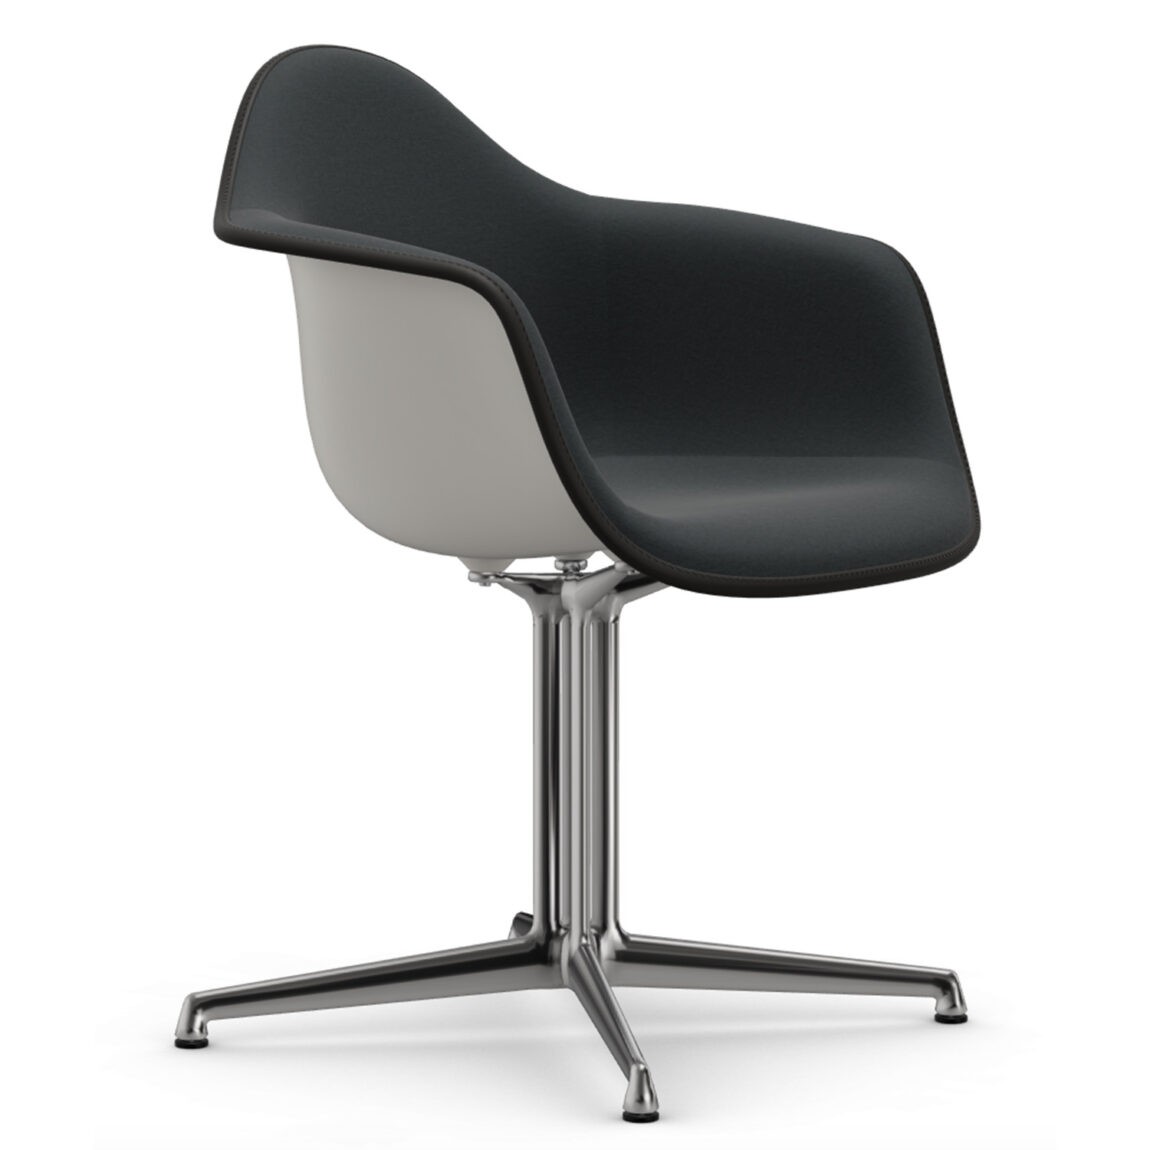 Výprodej Vitra designové židle DAL-skořepina bílá